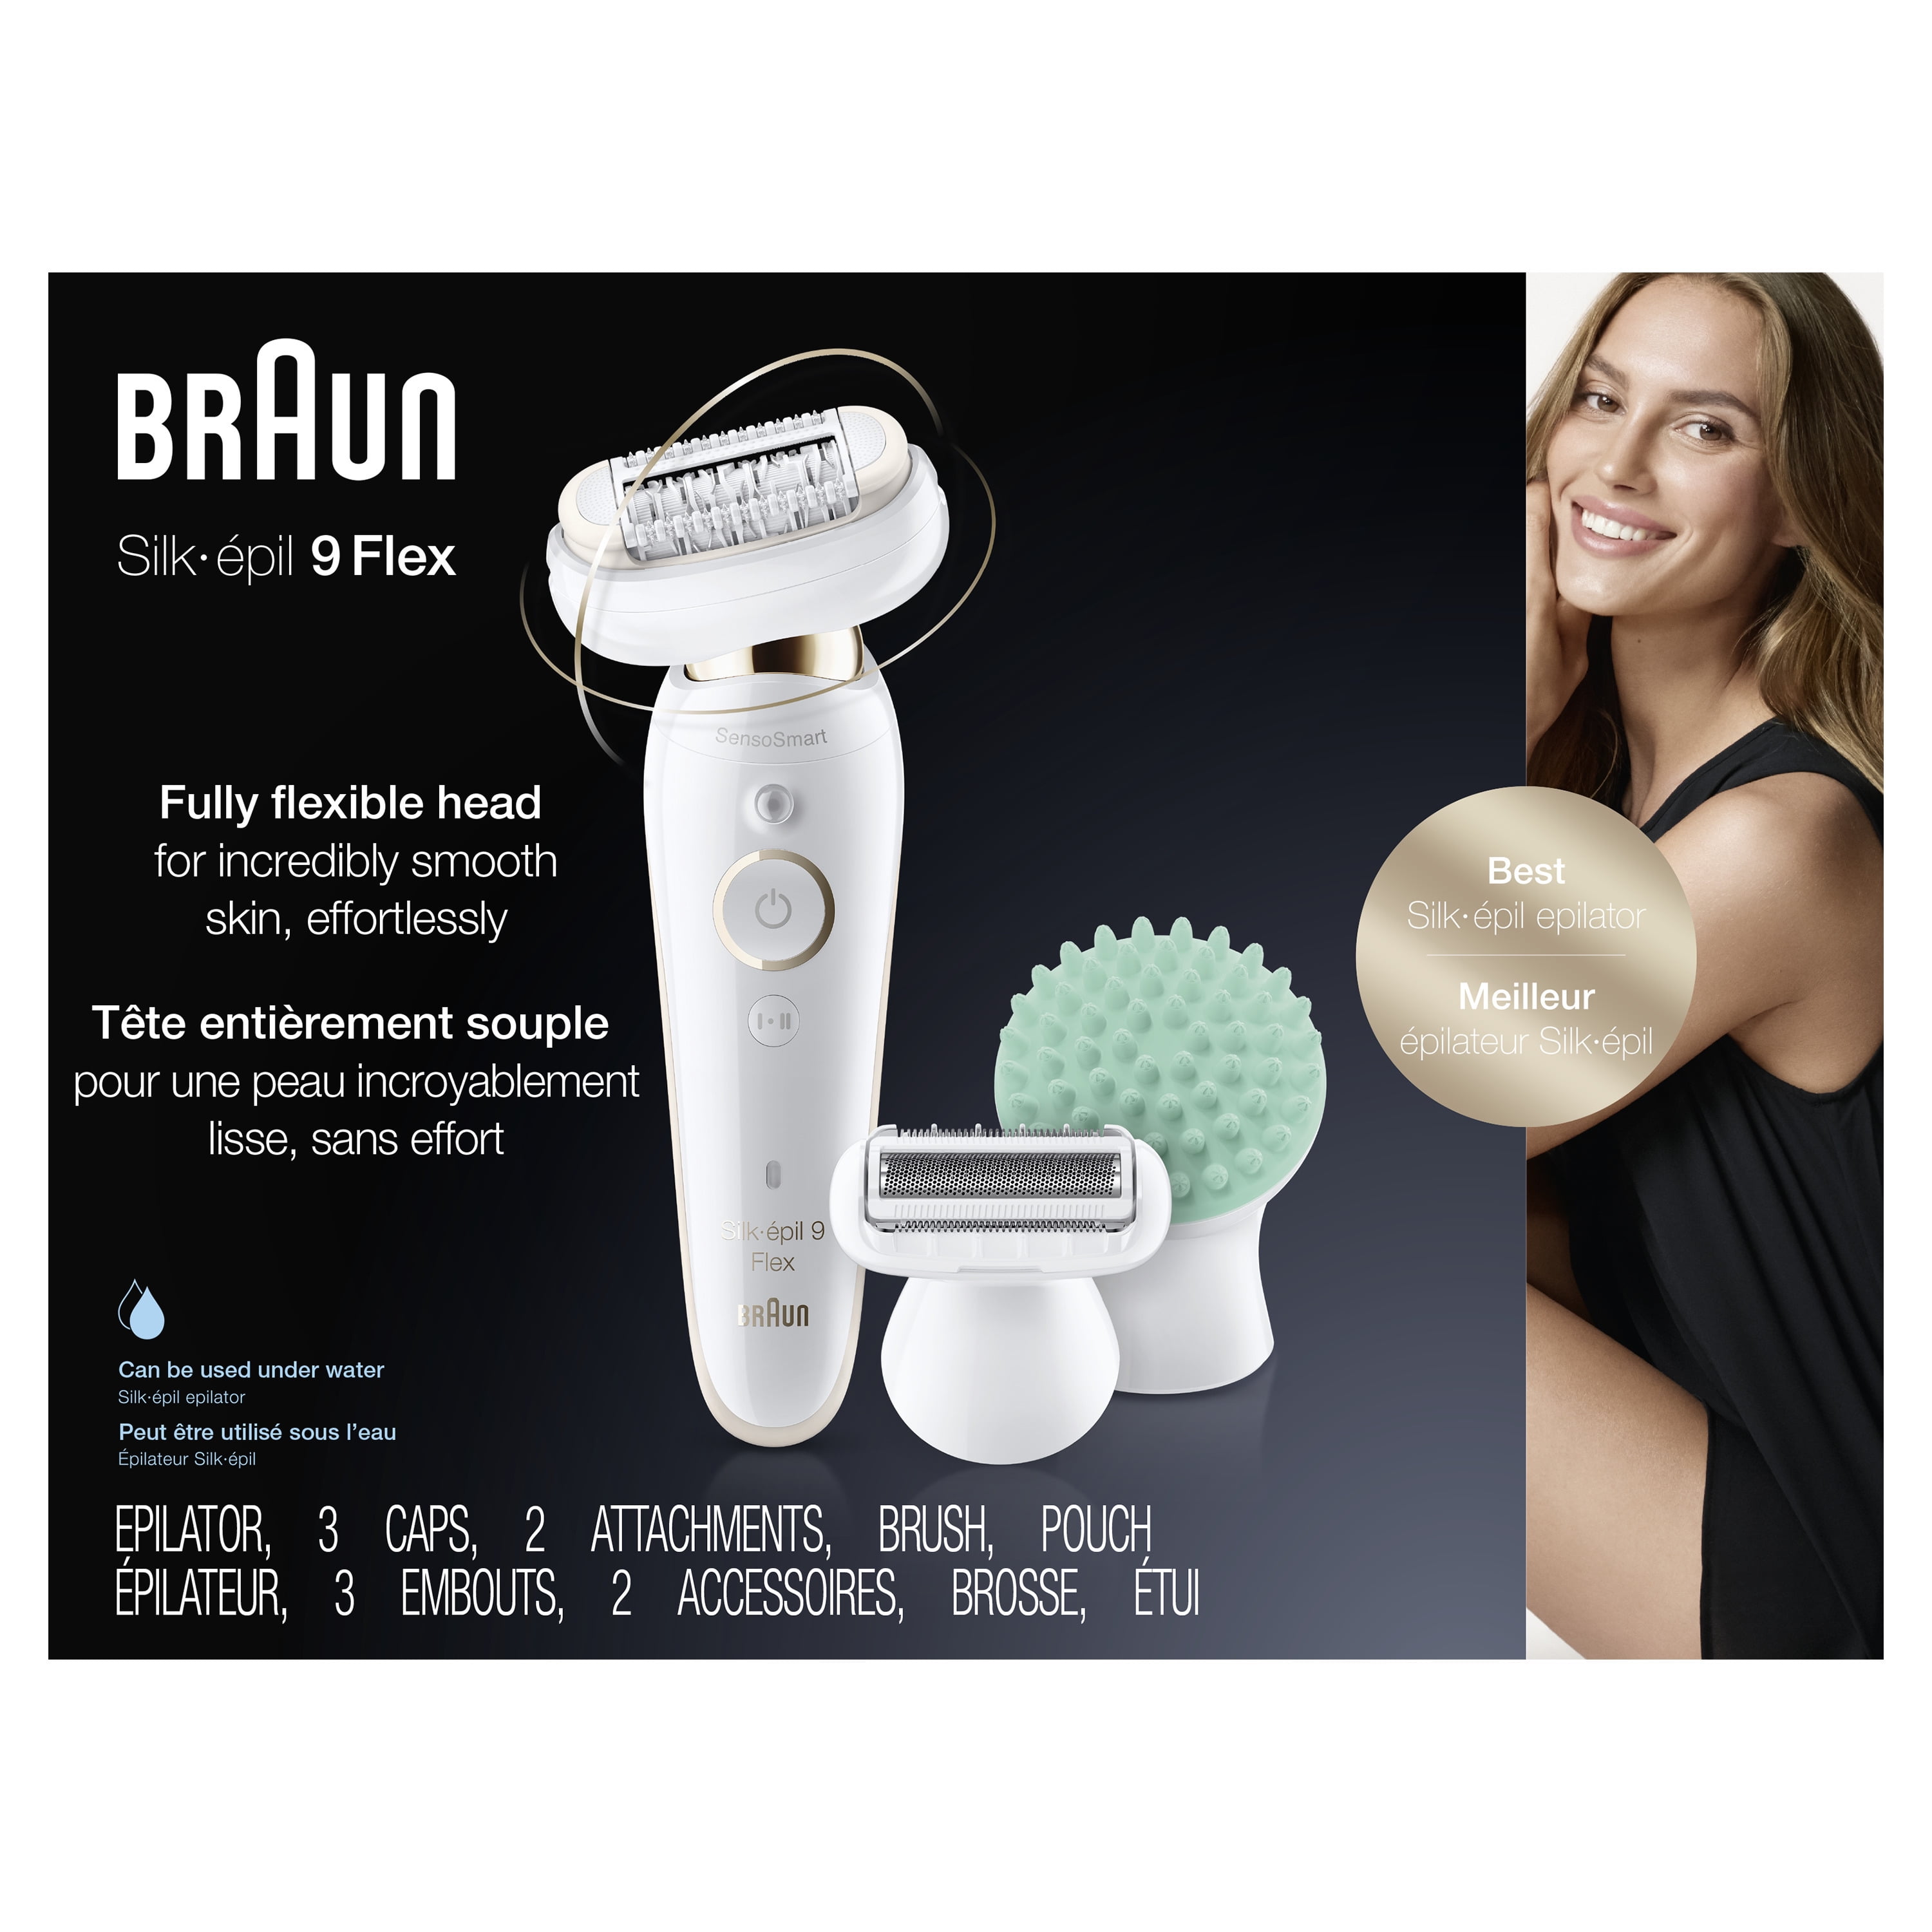 Braun Silk-epil 9 Flex 9-020 - Epilator for Women, White/Gold